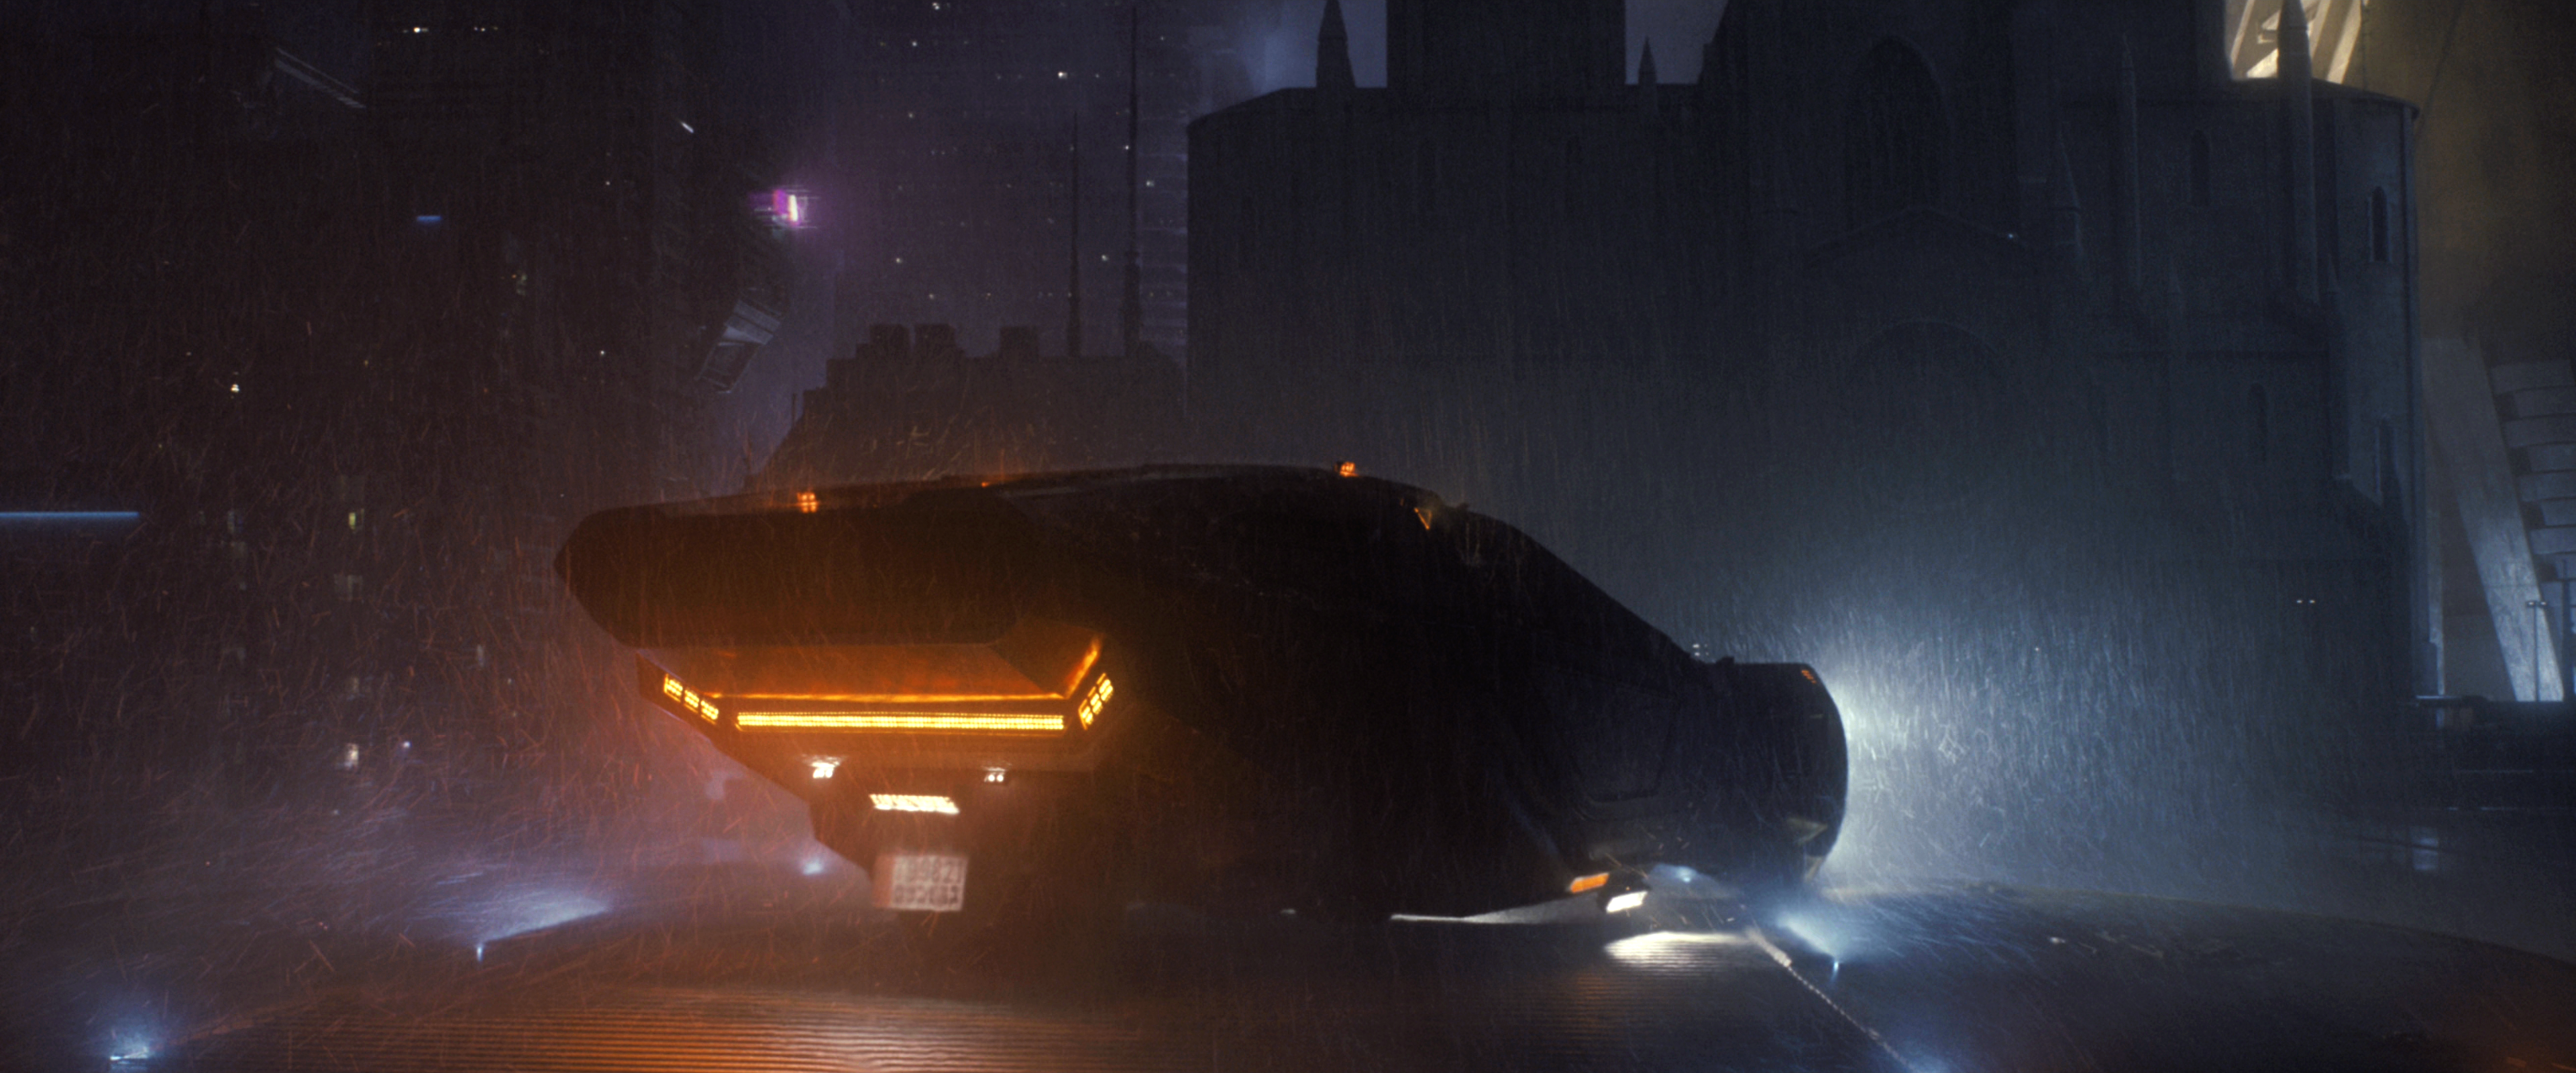 General 3840x1600 Blade Runner Blade Runner 2049 cyberpunk movies futuristic city vehicle rain dark night 2017 (Year) Denis Villeneuve digital art low light film stills ultrawide